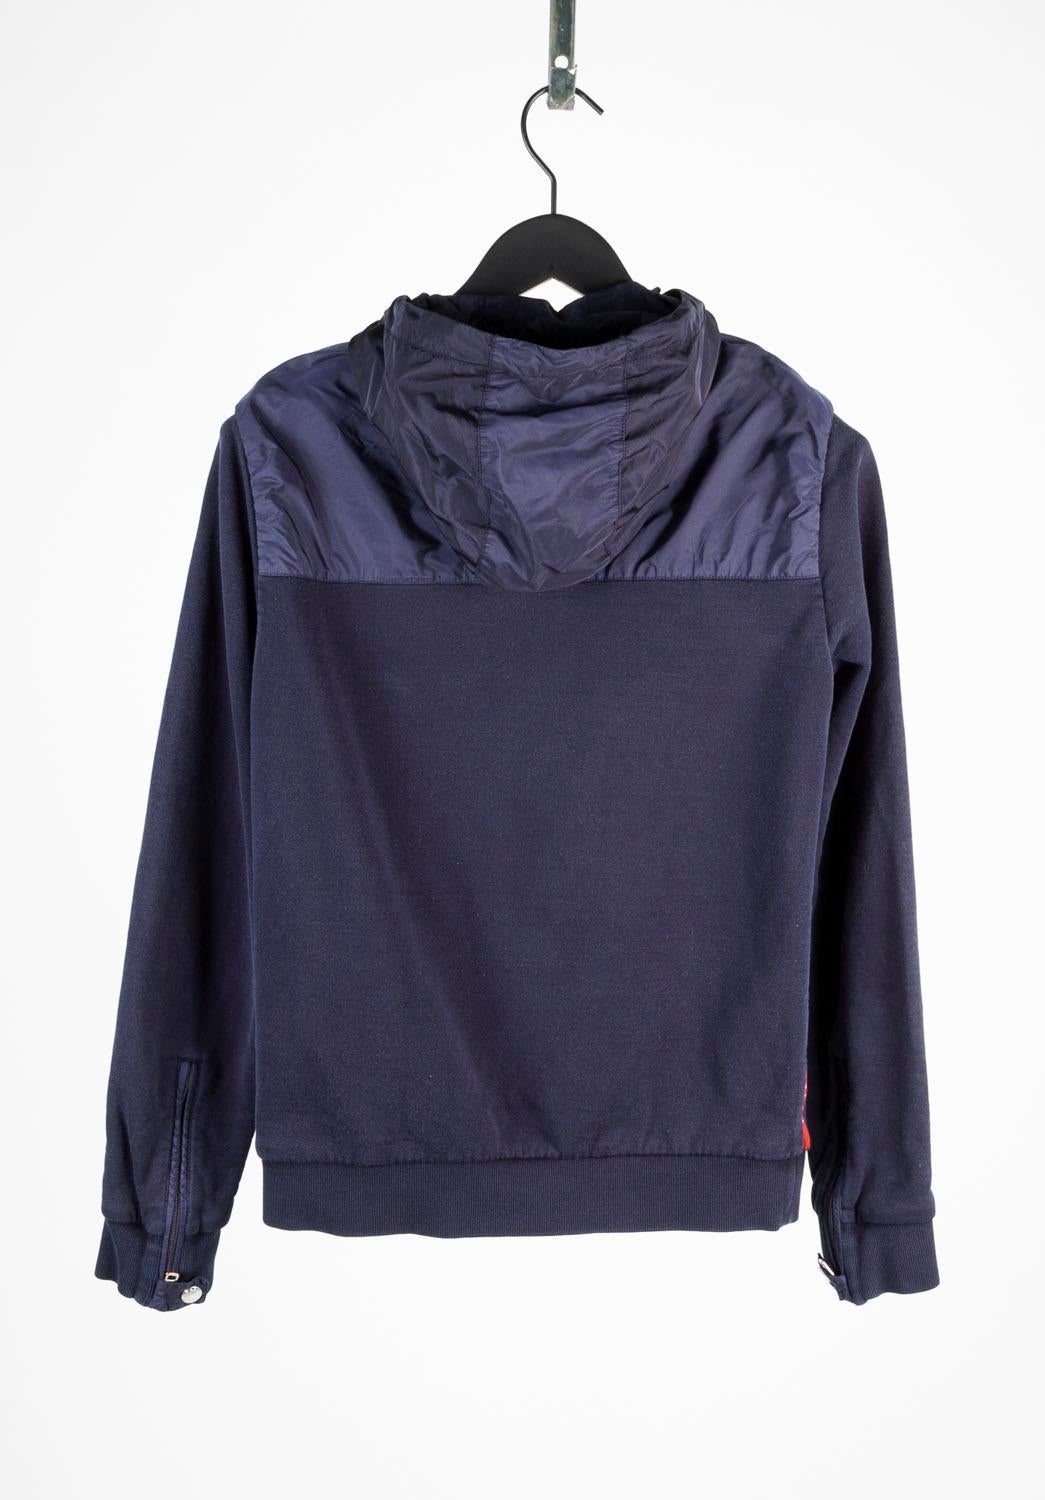  Prada Men Jacket Sweatshirt Light Zipped Hooded Size M, S662 For Sale 1